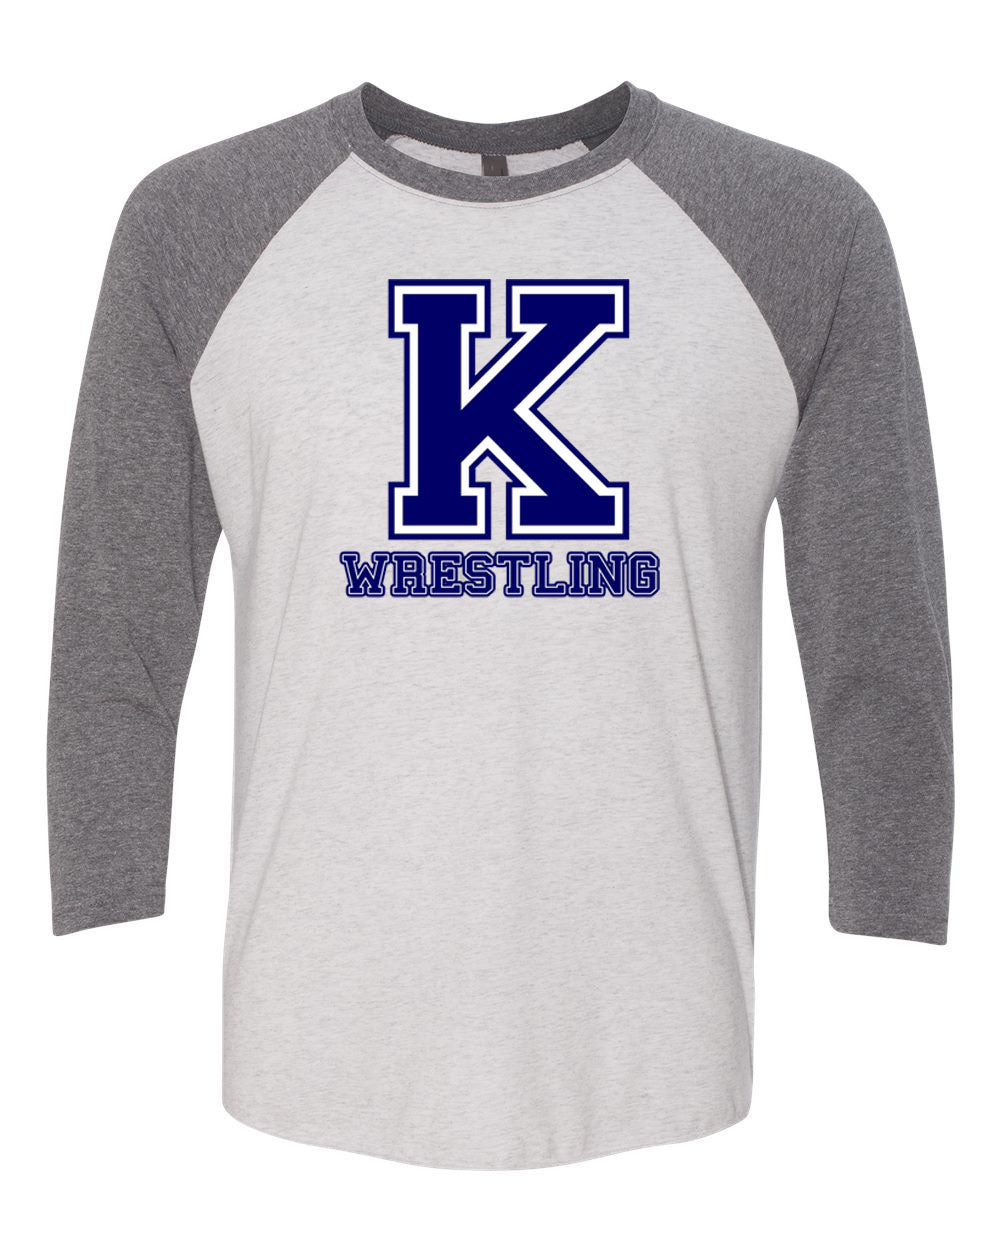 Kittatinny Wrestling Design 6 raglan shirt